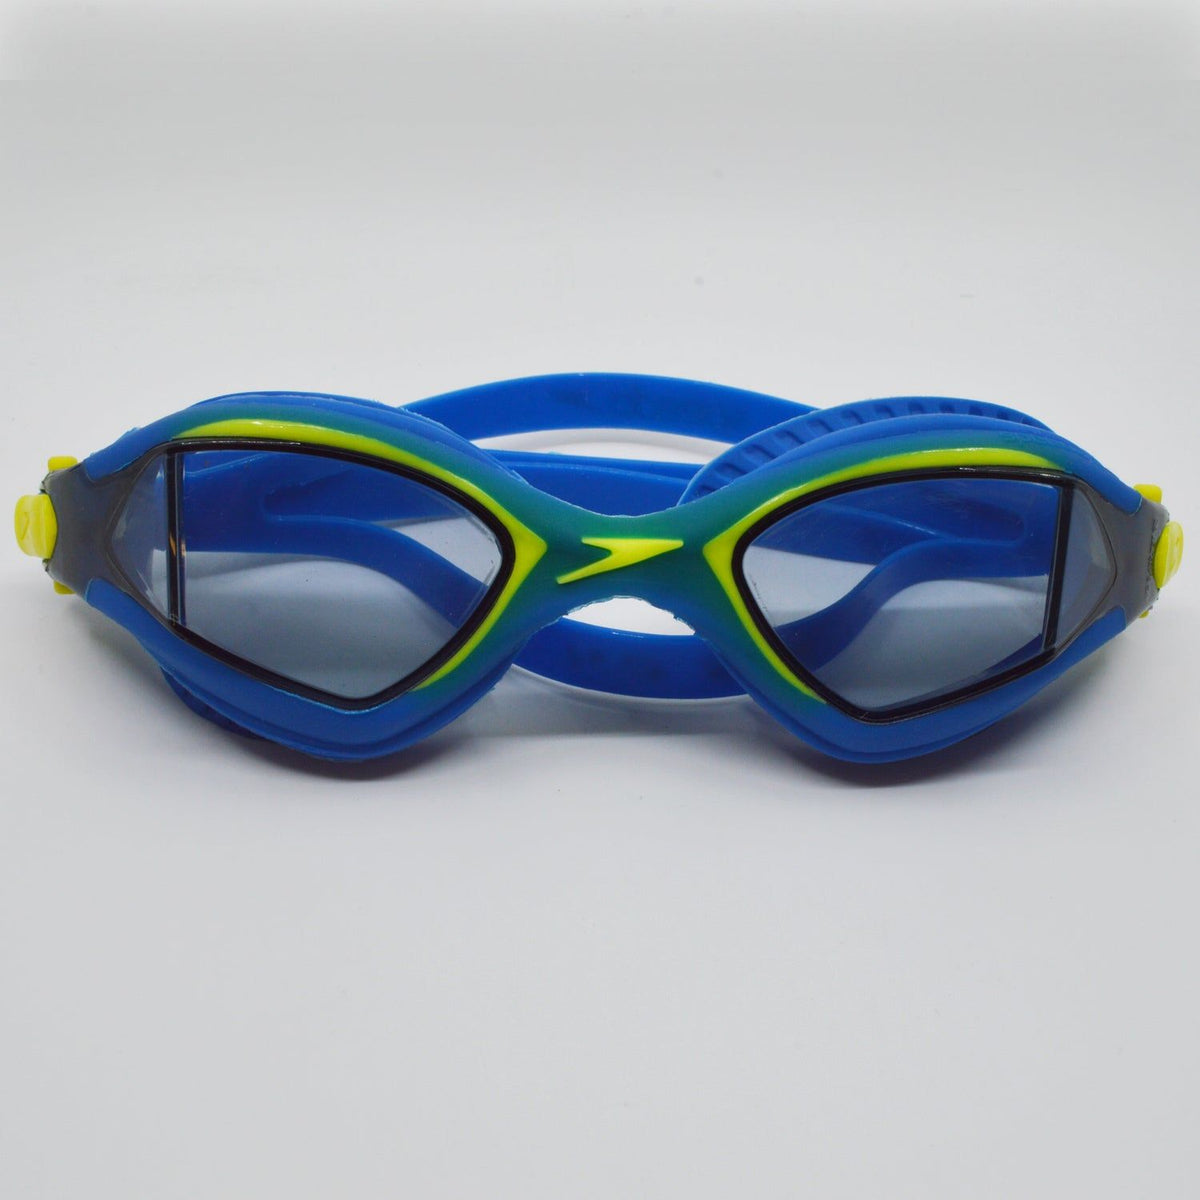 Speedo MDR 2.4 Goggle - Imperial Blue/Sulphur Spring/Smoke - Used